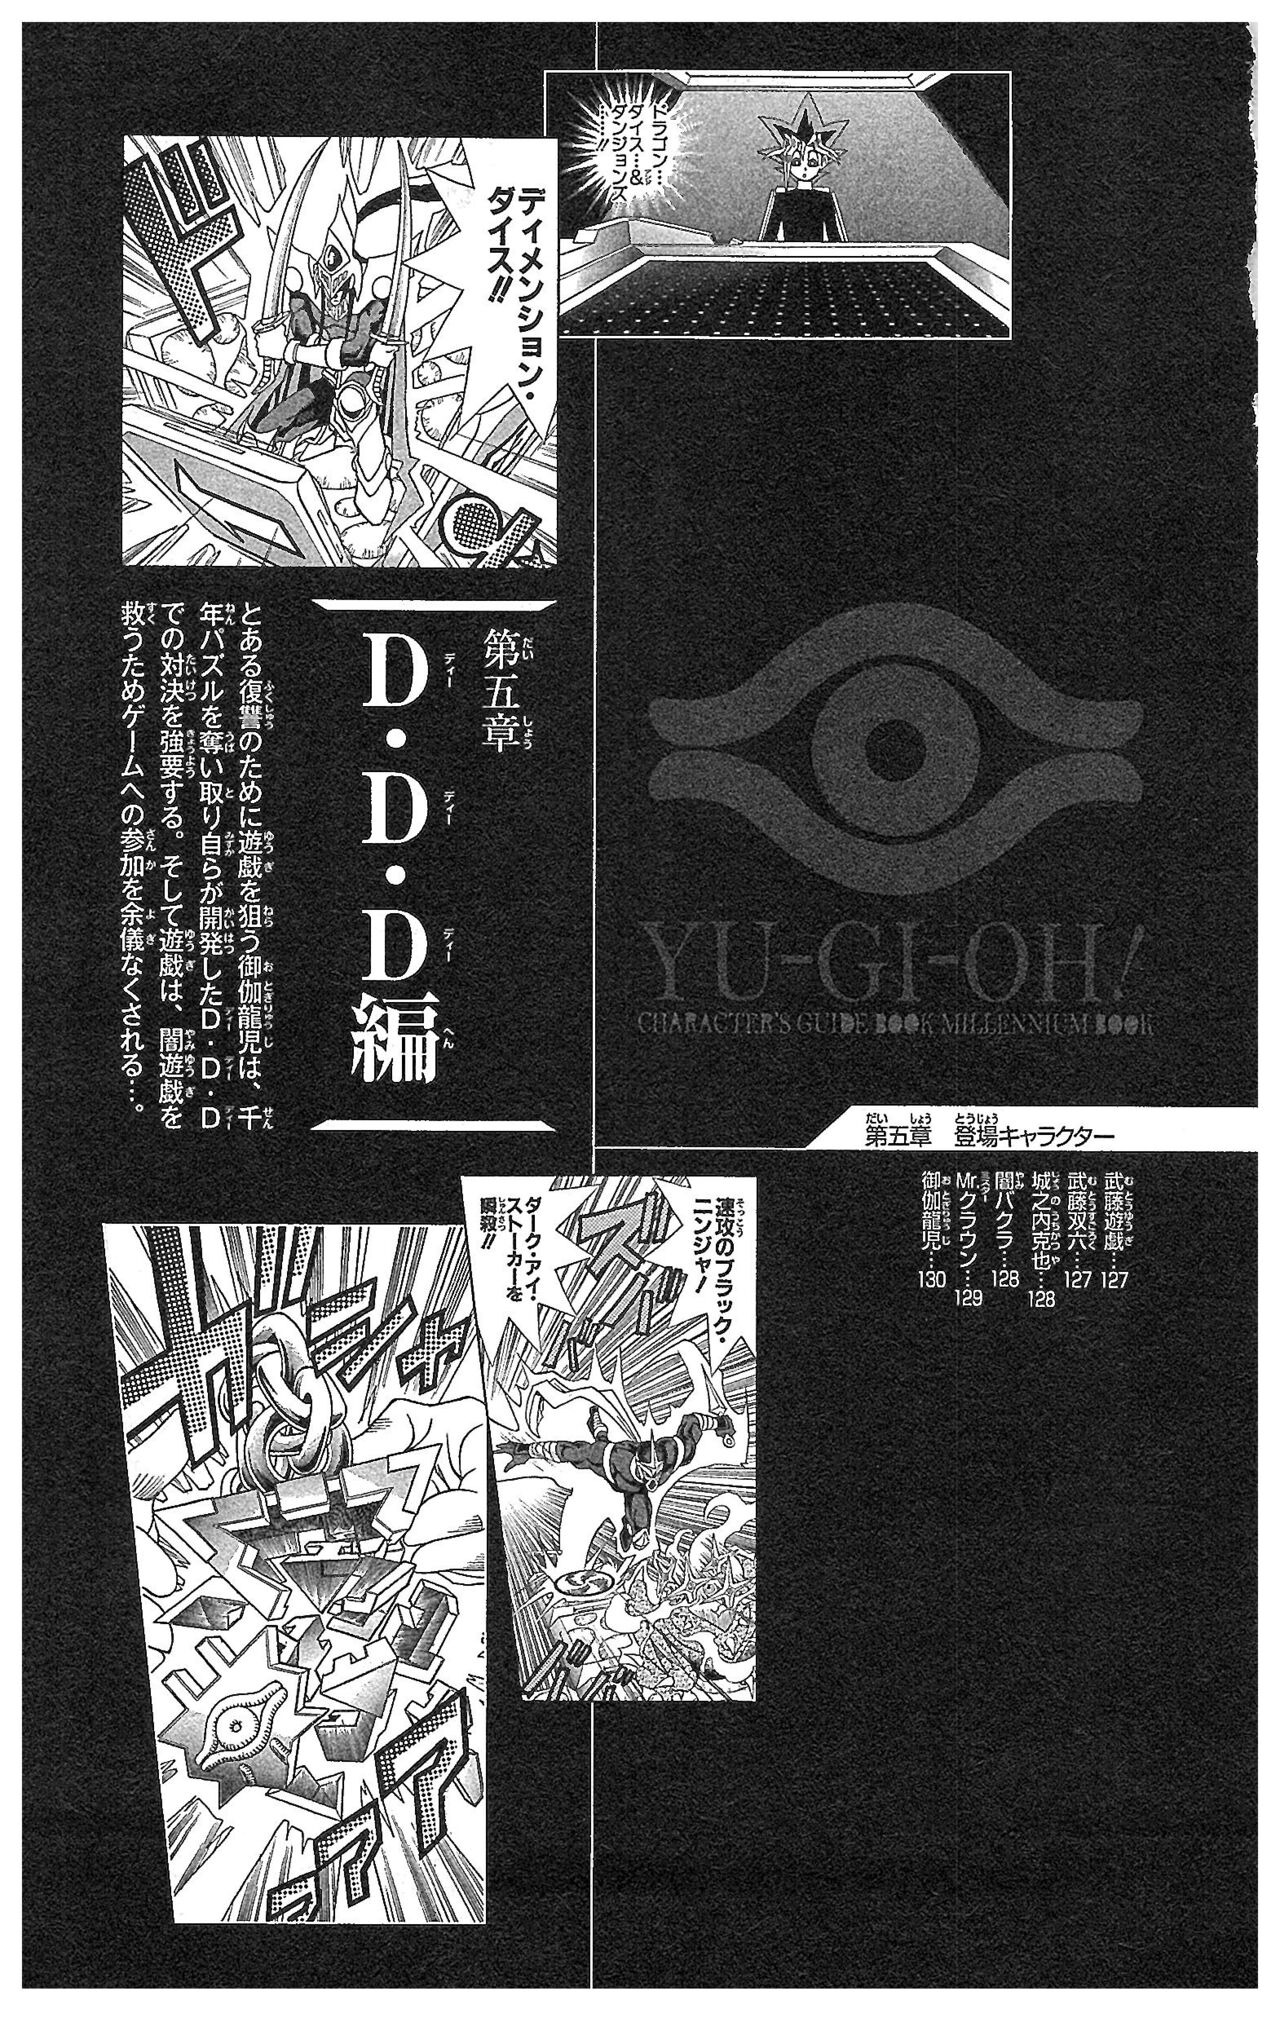 Yu-Gi-Oh! Character Guidebook: Millennium Book 121